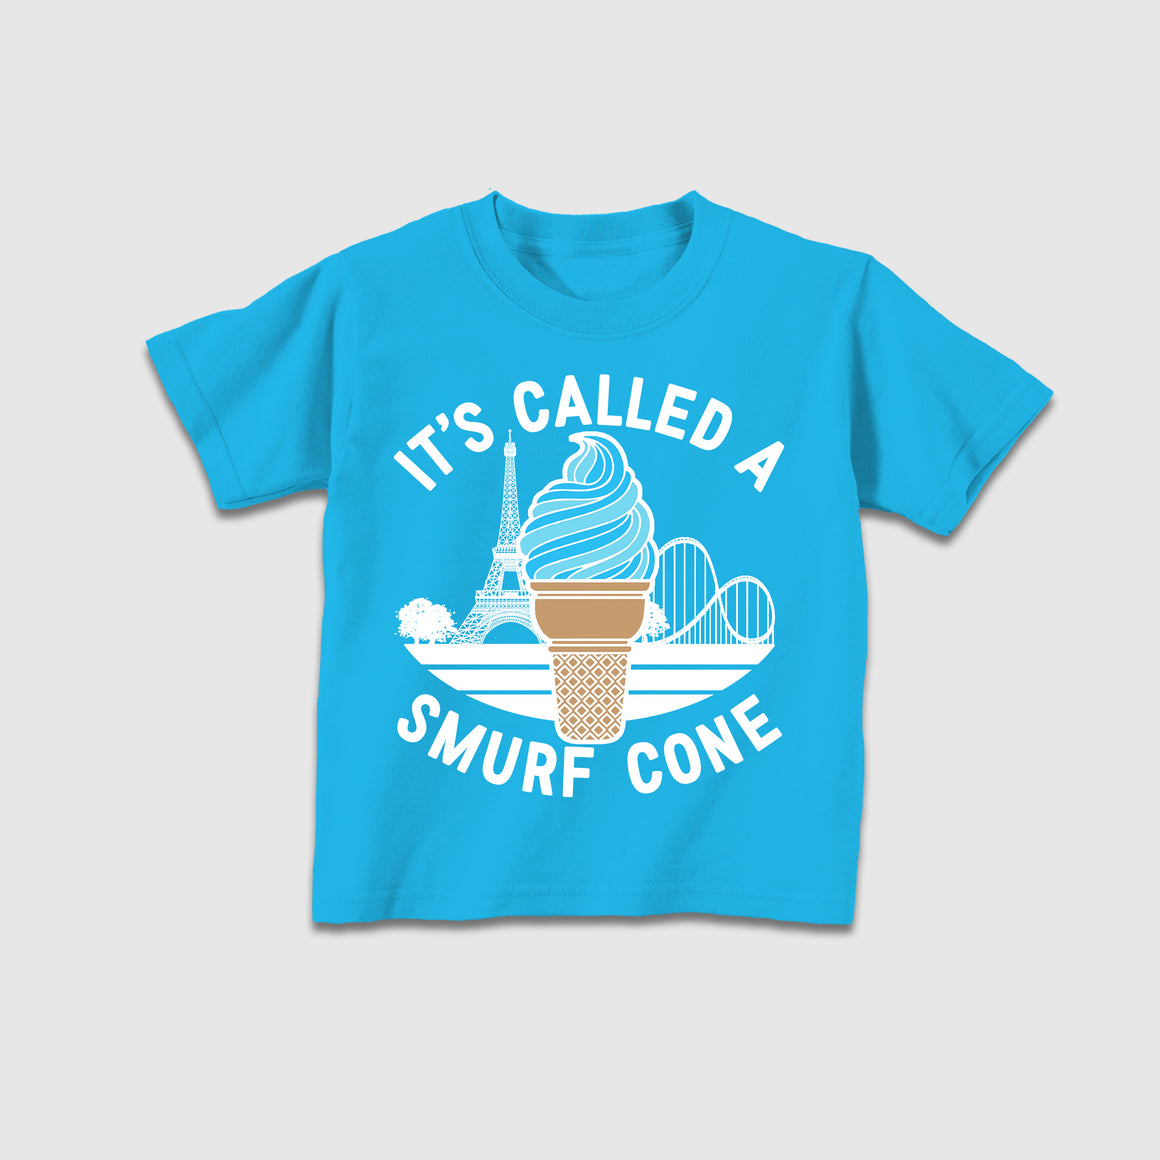 Smurf Cone - Neon Blue Youth Tee - Cincy Shirts